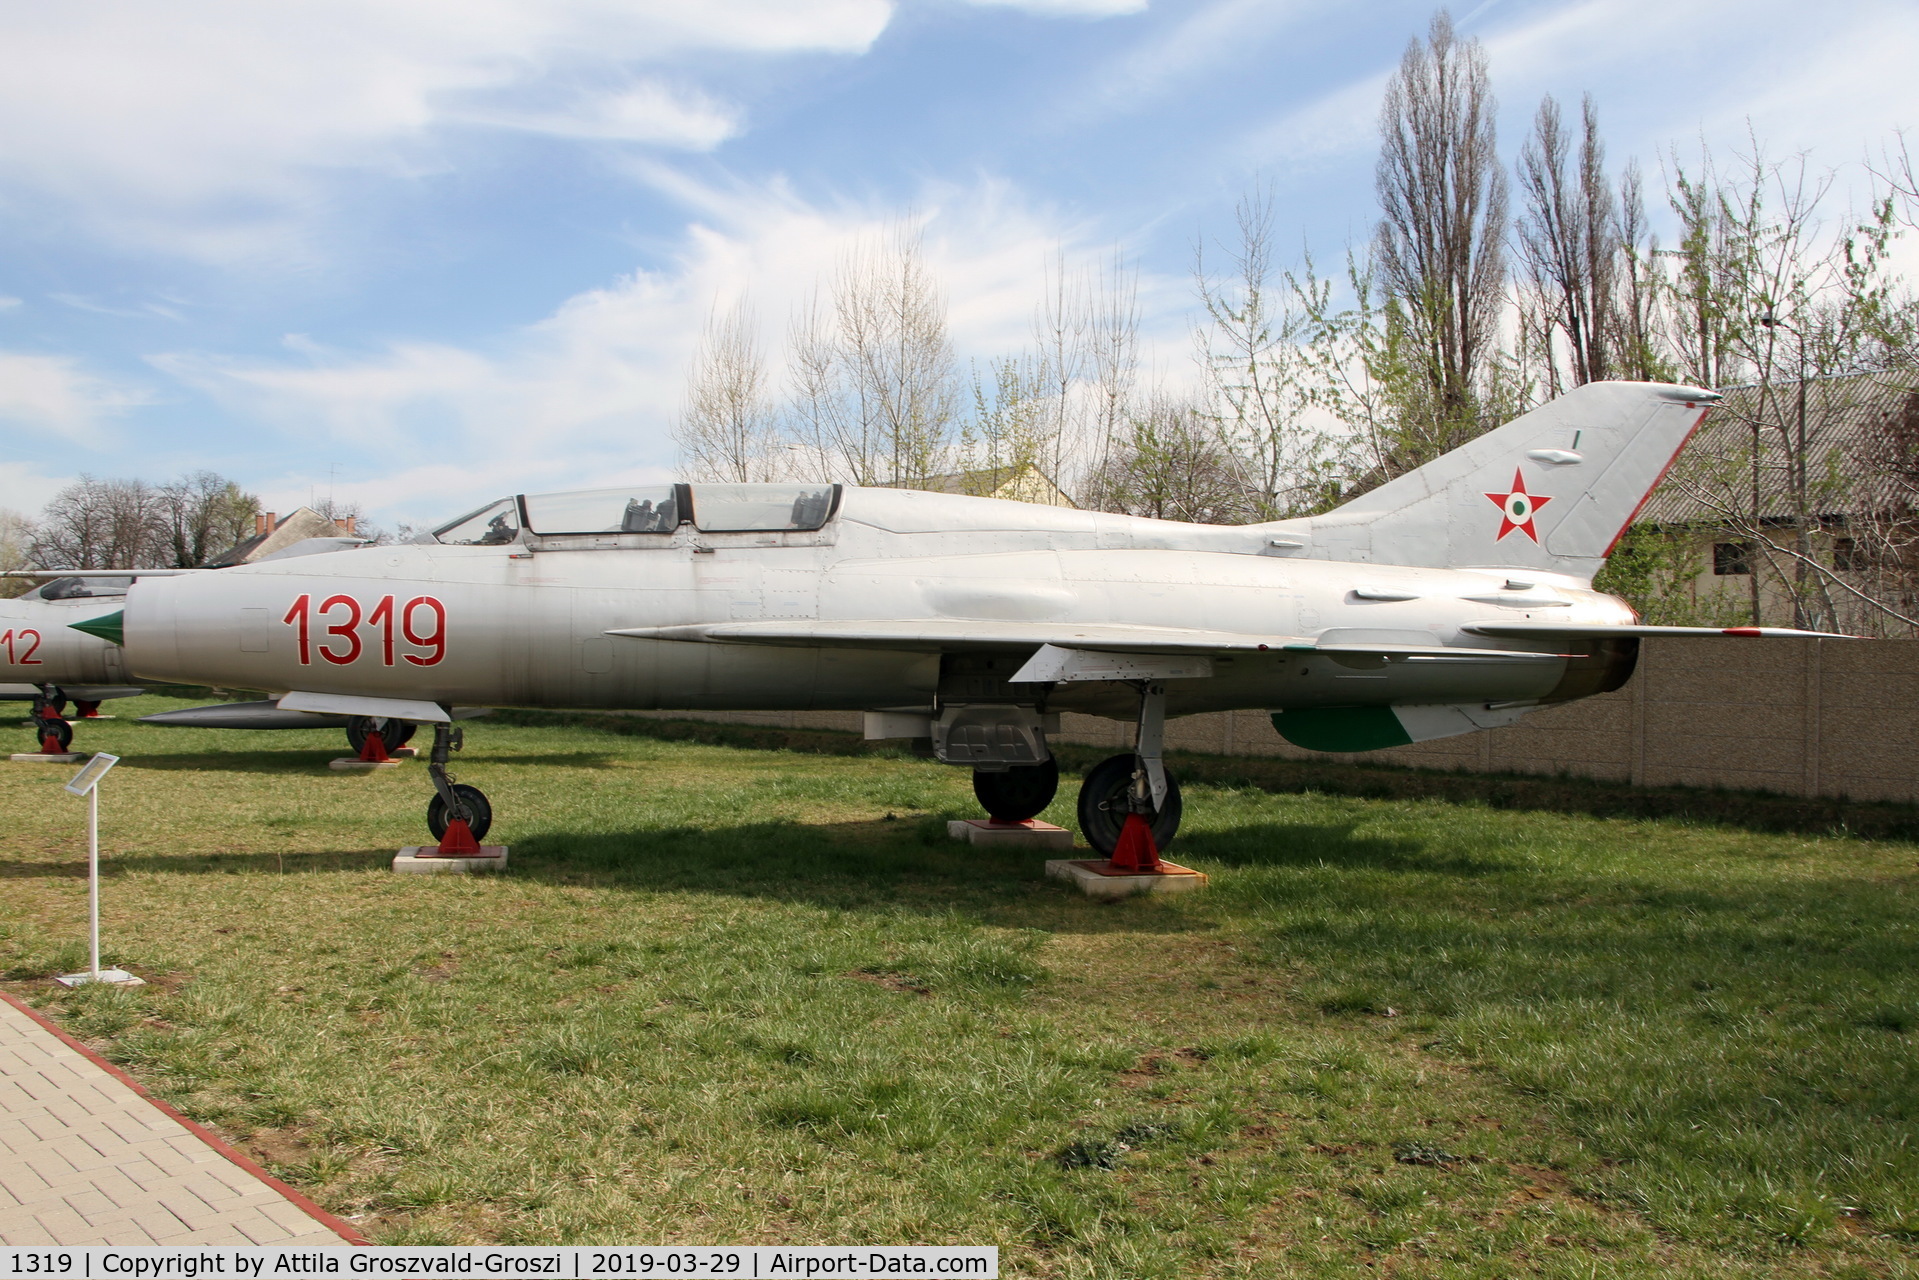 1319, 1965 Mikoyan-Gurevich MiG-21U-400 C/N 661319, RepTár. Szolnok aviation history museum, Hungary